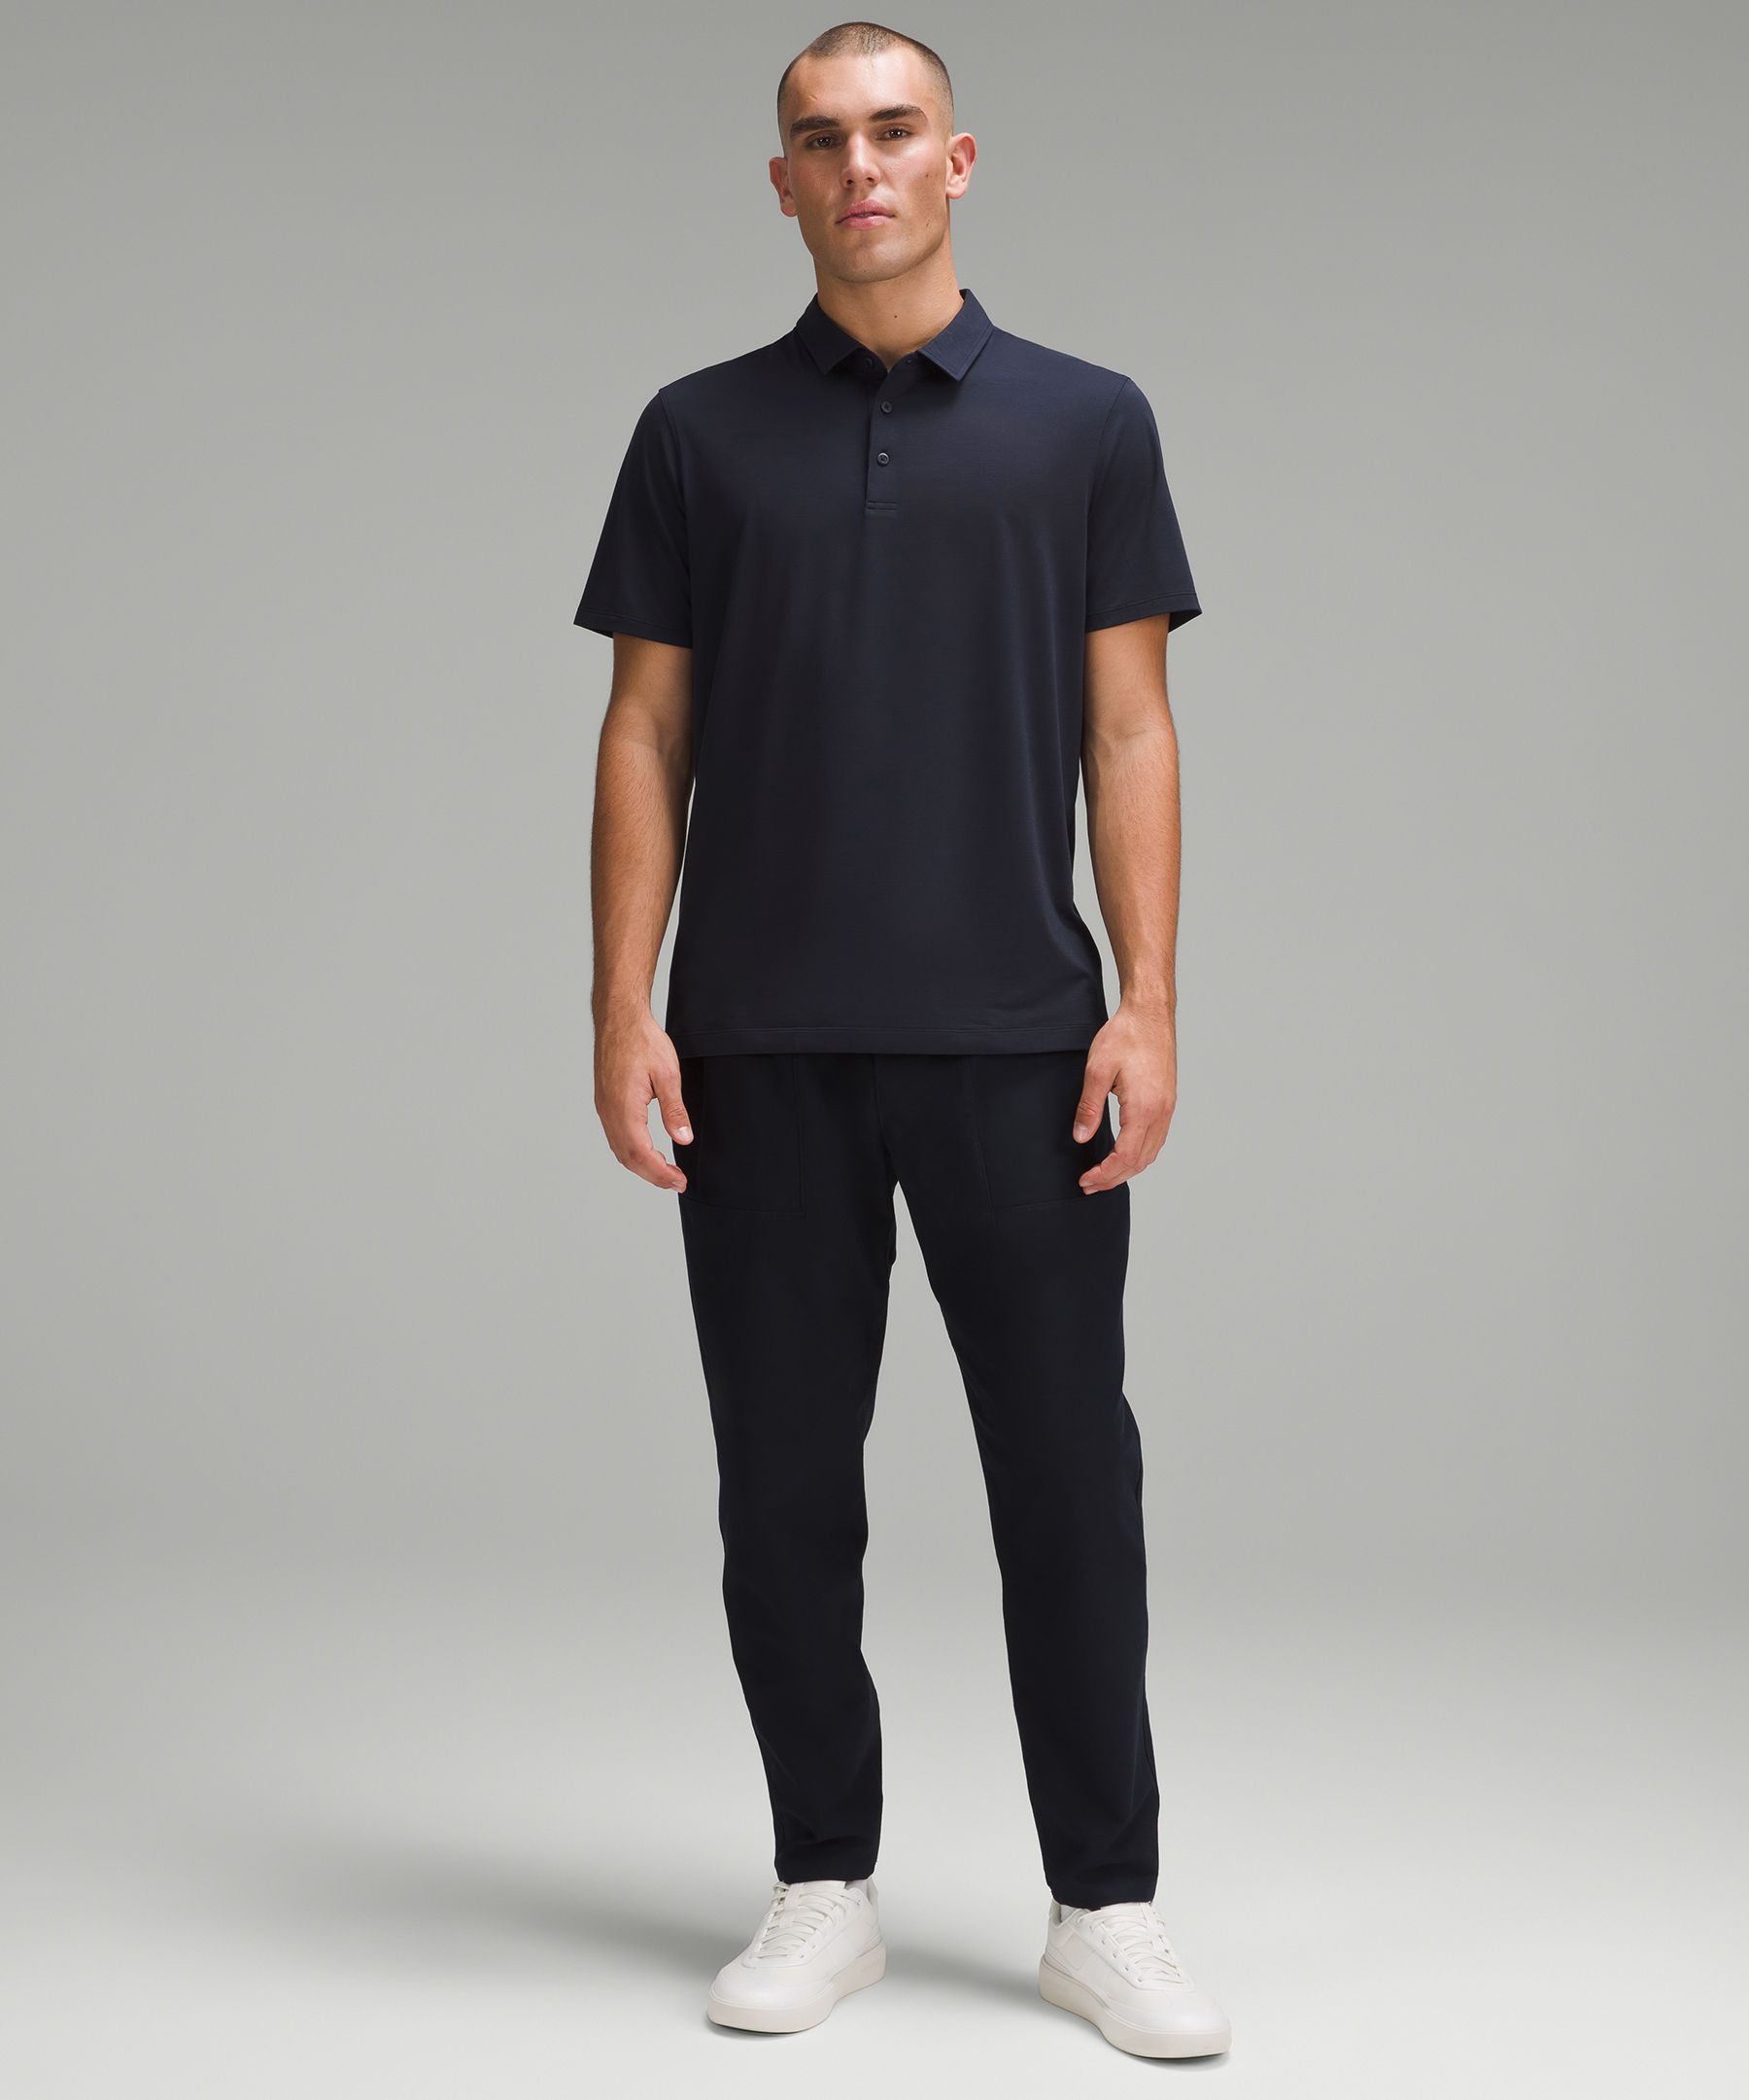 Lululemon and Evolution Short-Sleeve Polo Shirt - Navy/Blue - Size S